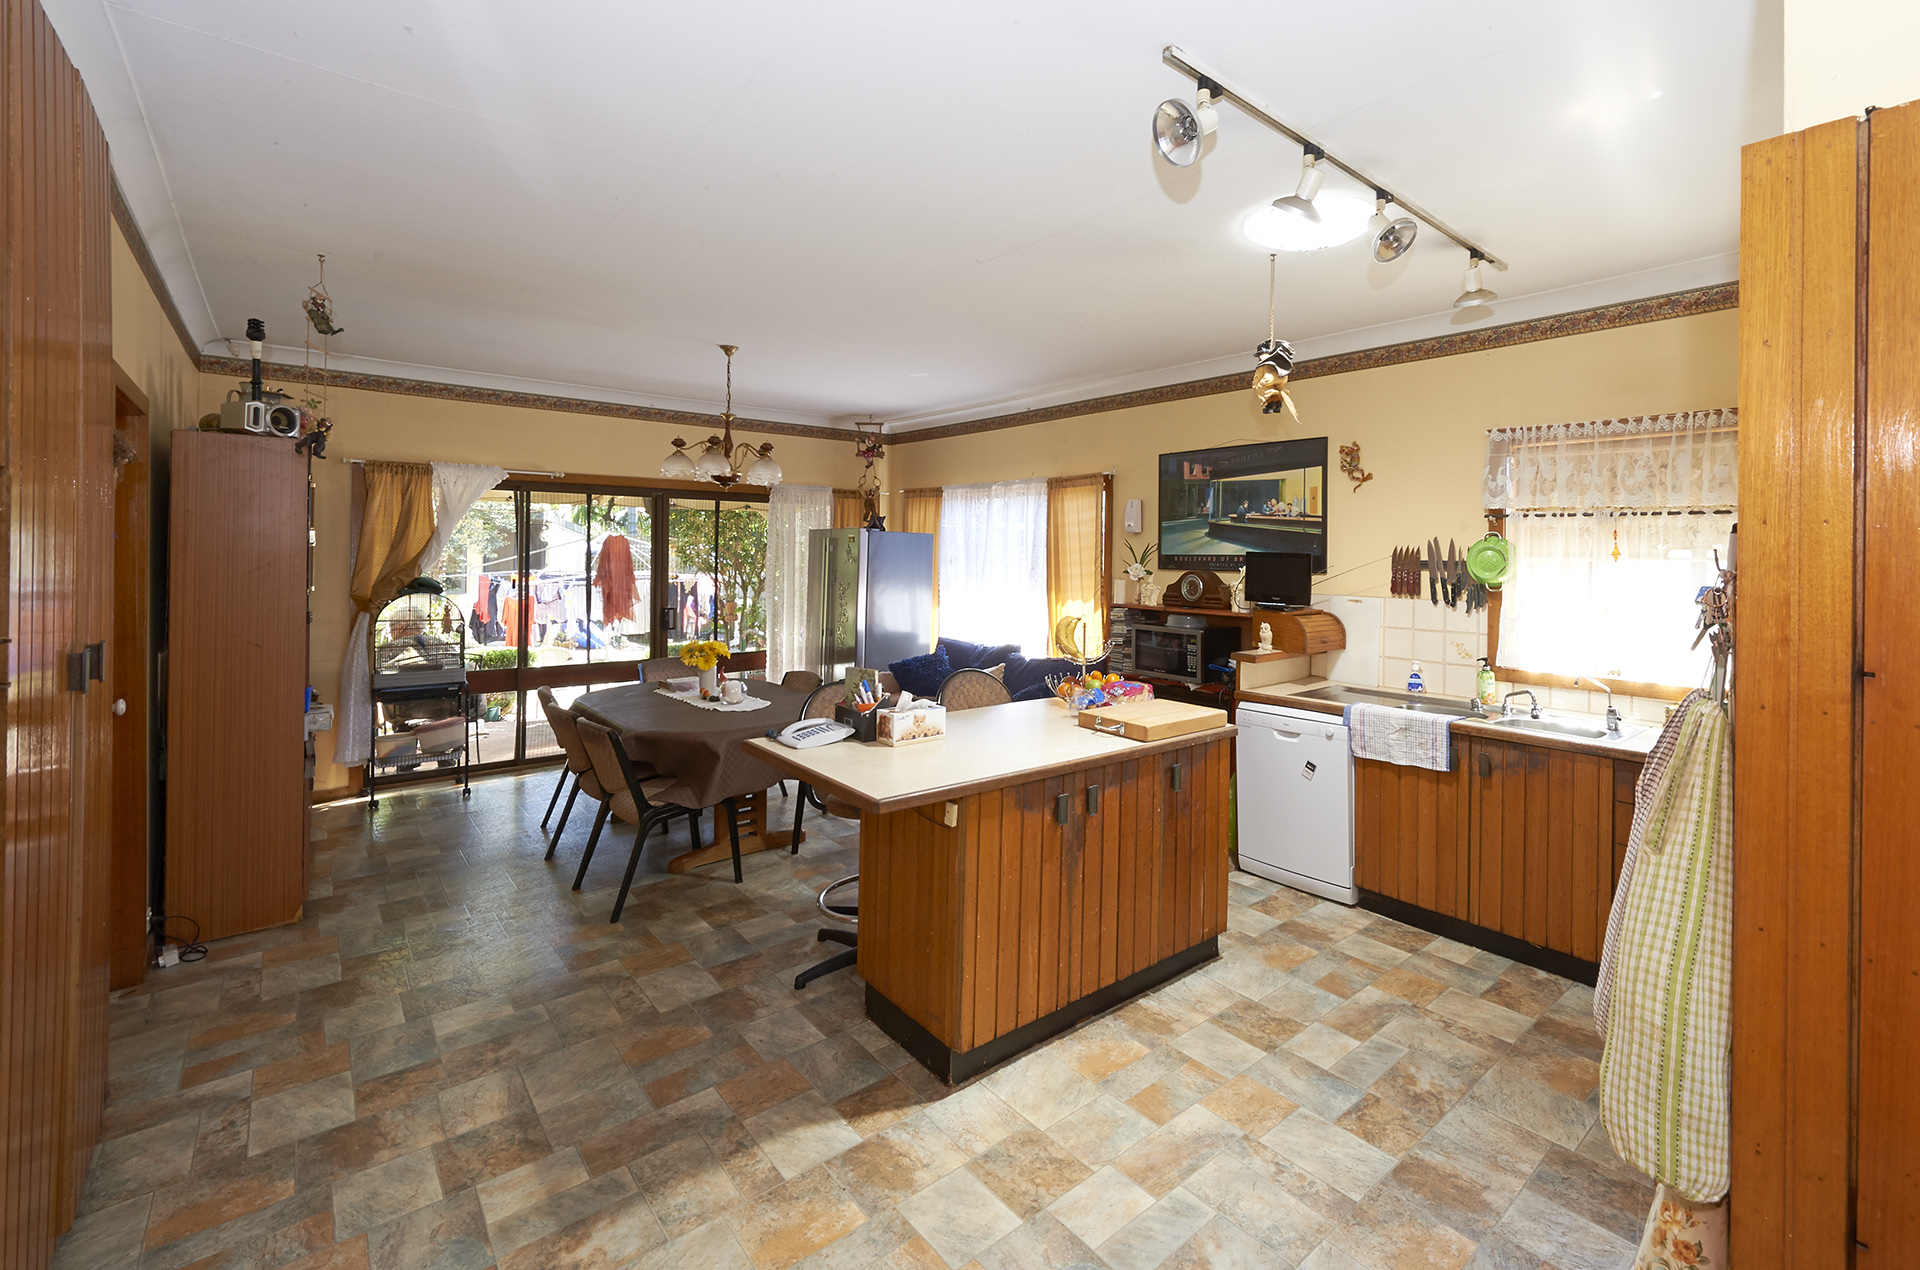 Kitchen renovation ideas: 5 budget savvy tips | Homes To Love